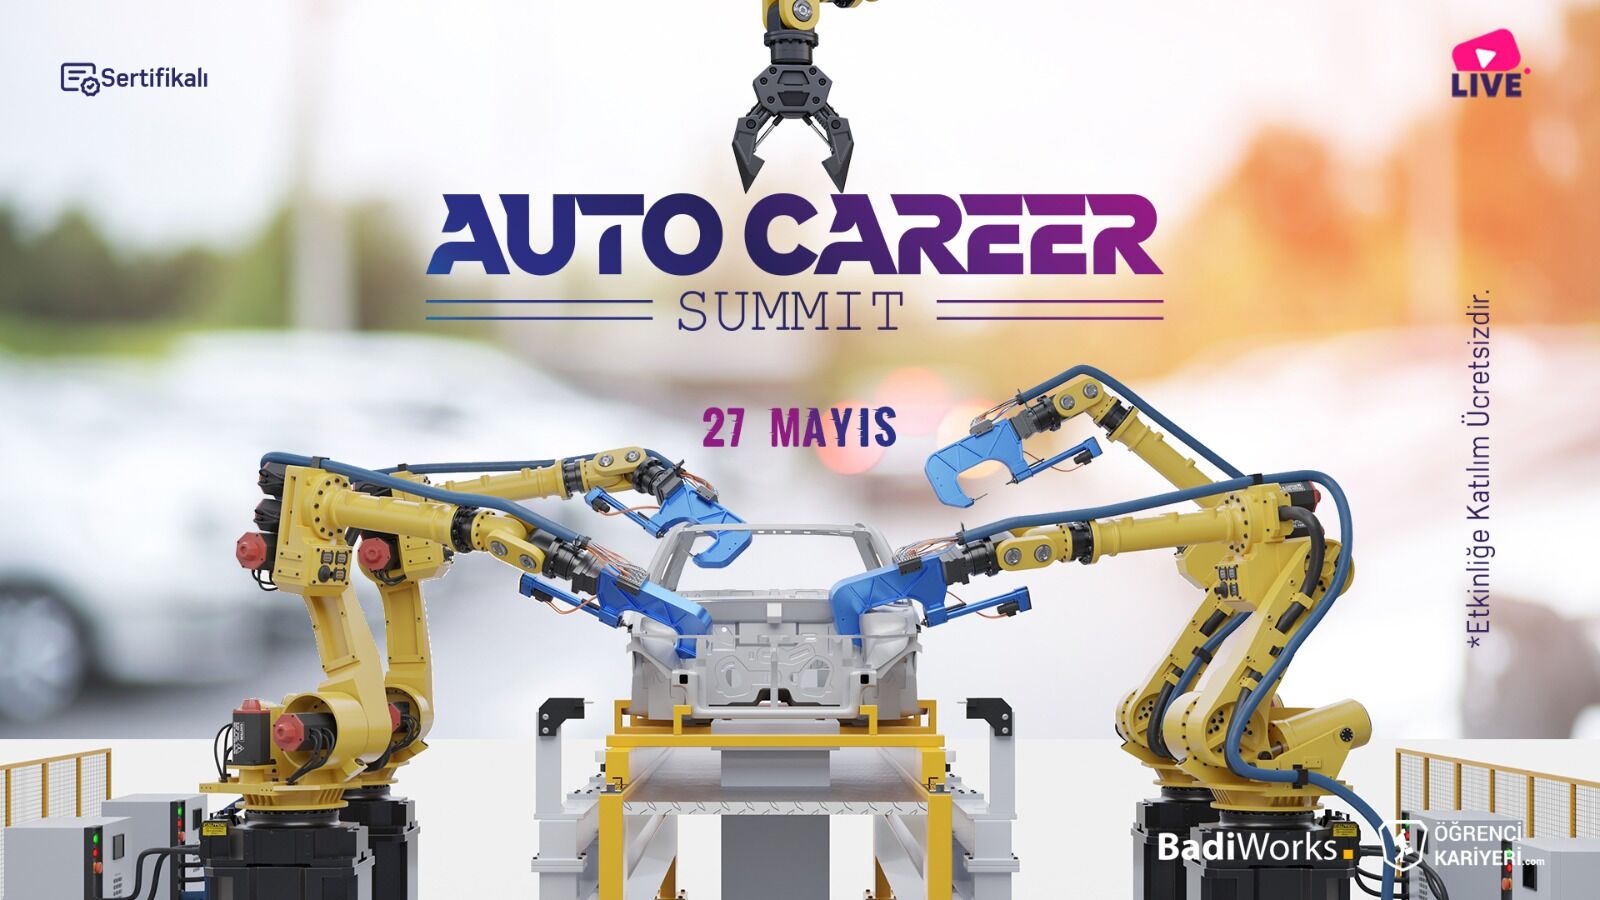 Auto Career Summit 27 Mayıs'ta Başlıyor!